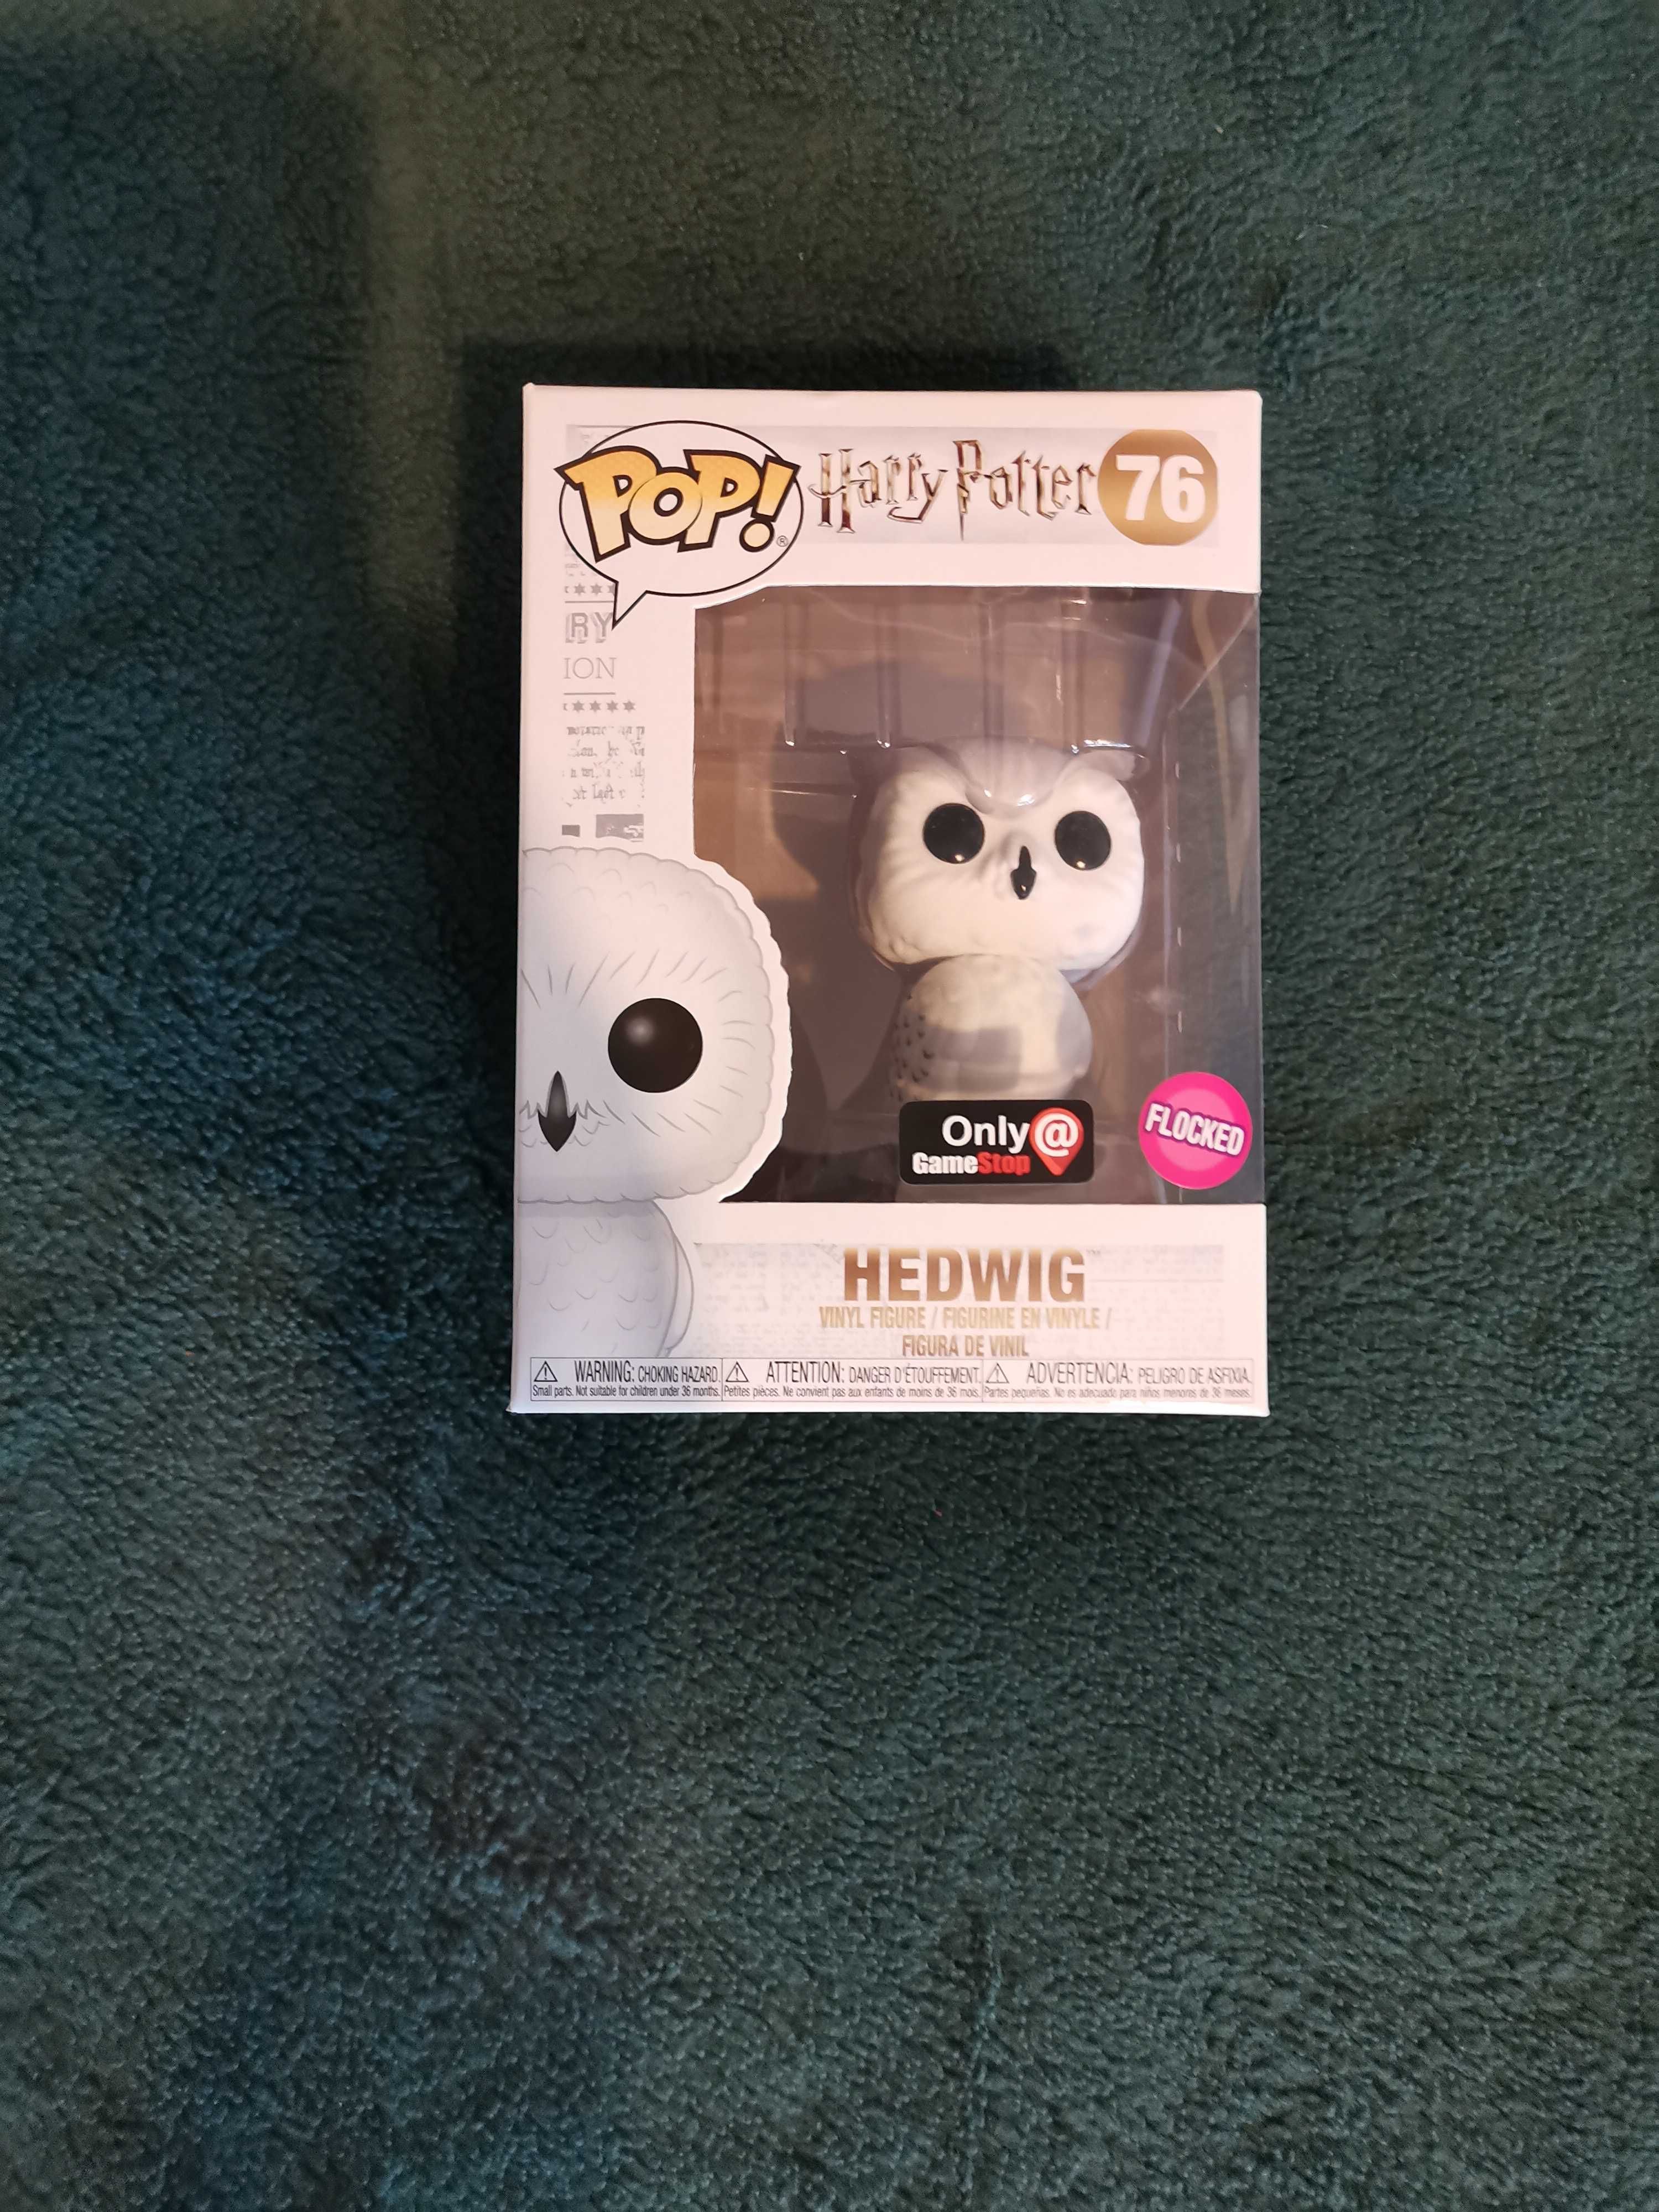 Funko Pop Harry Potter #76 Hedwig FLOCKED GameStop